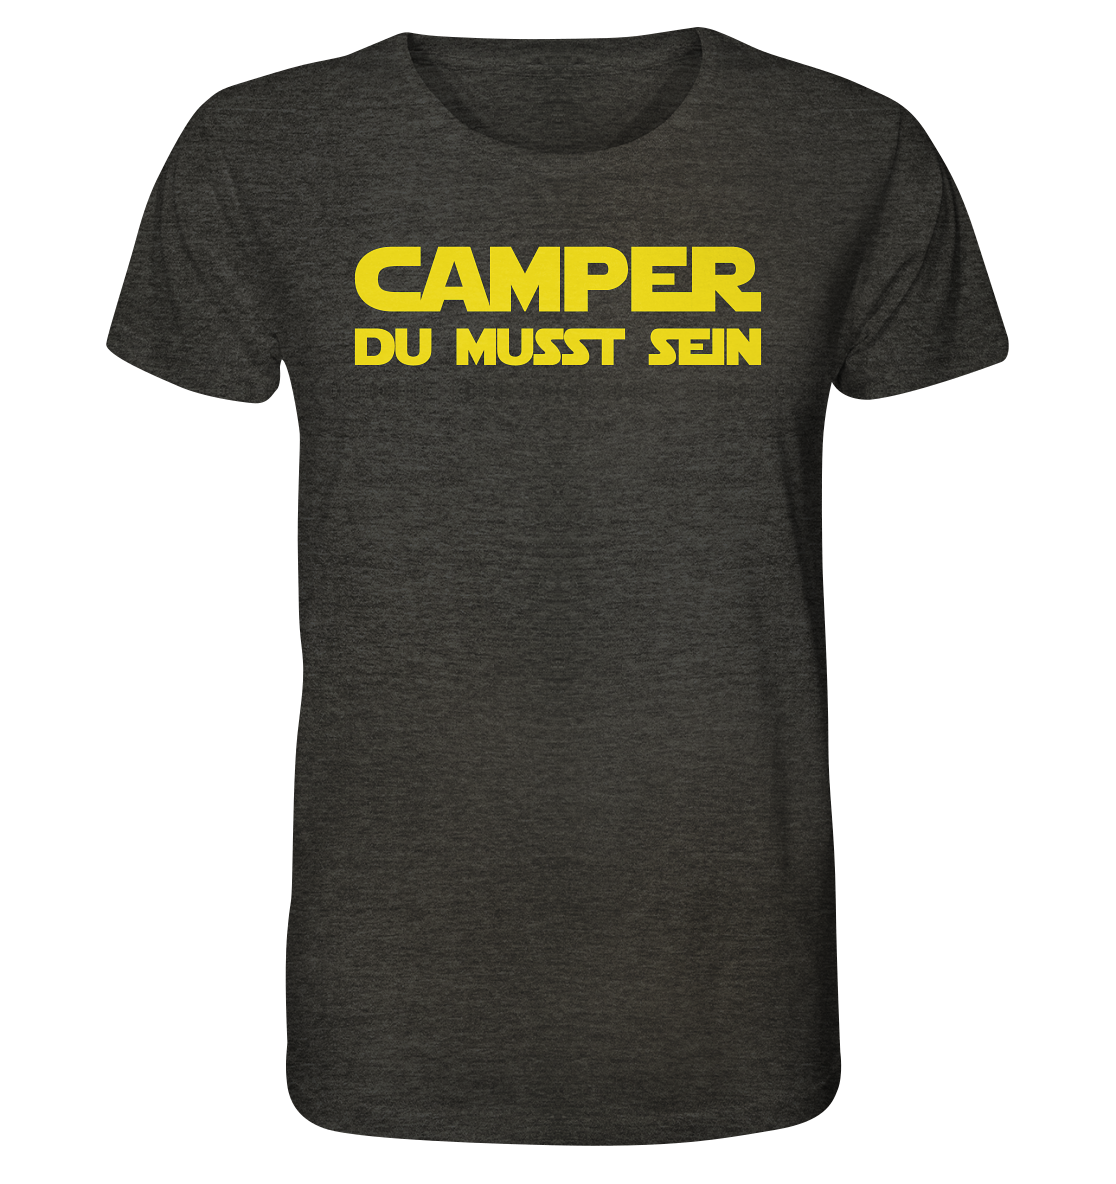 Camper du musst sein "v2" - Organic Shirt